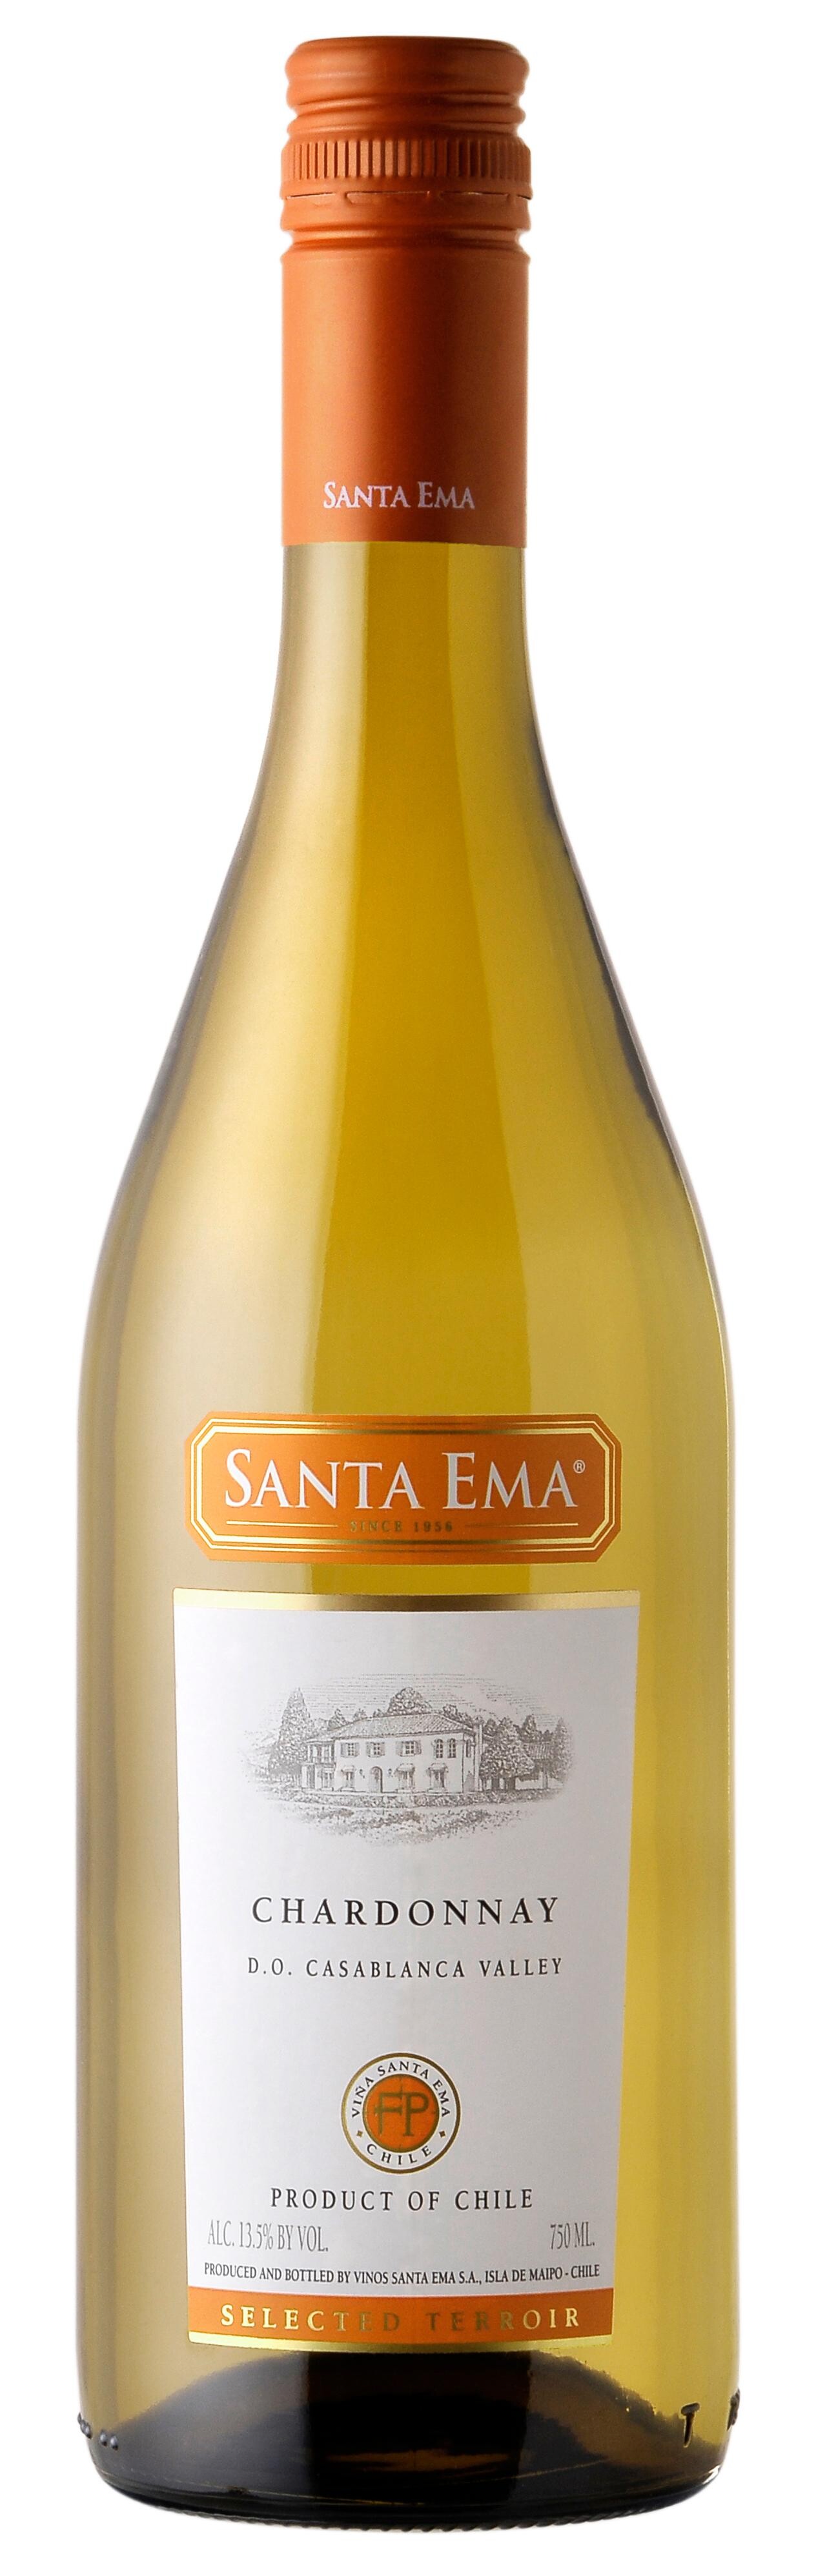 Santa Ema chardonnay 75cl Maipo Valley - Chilean wine